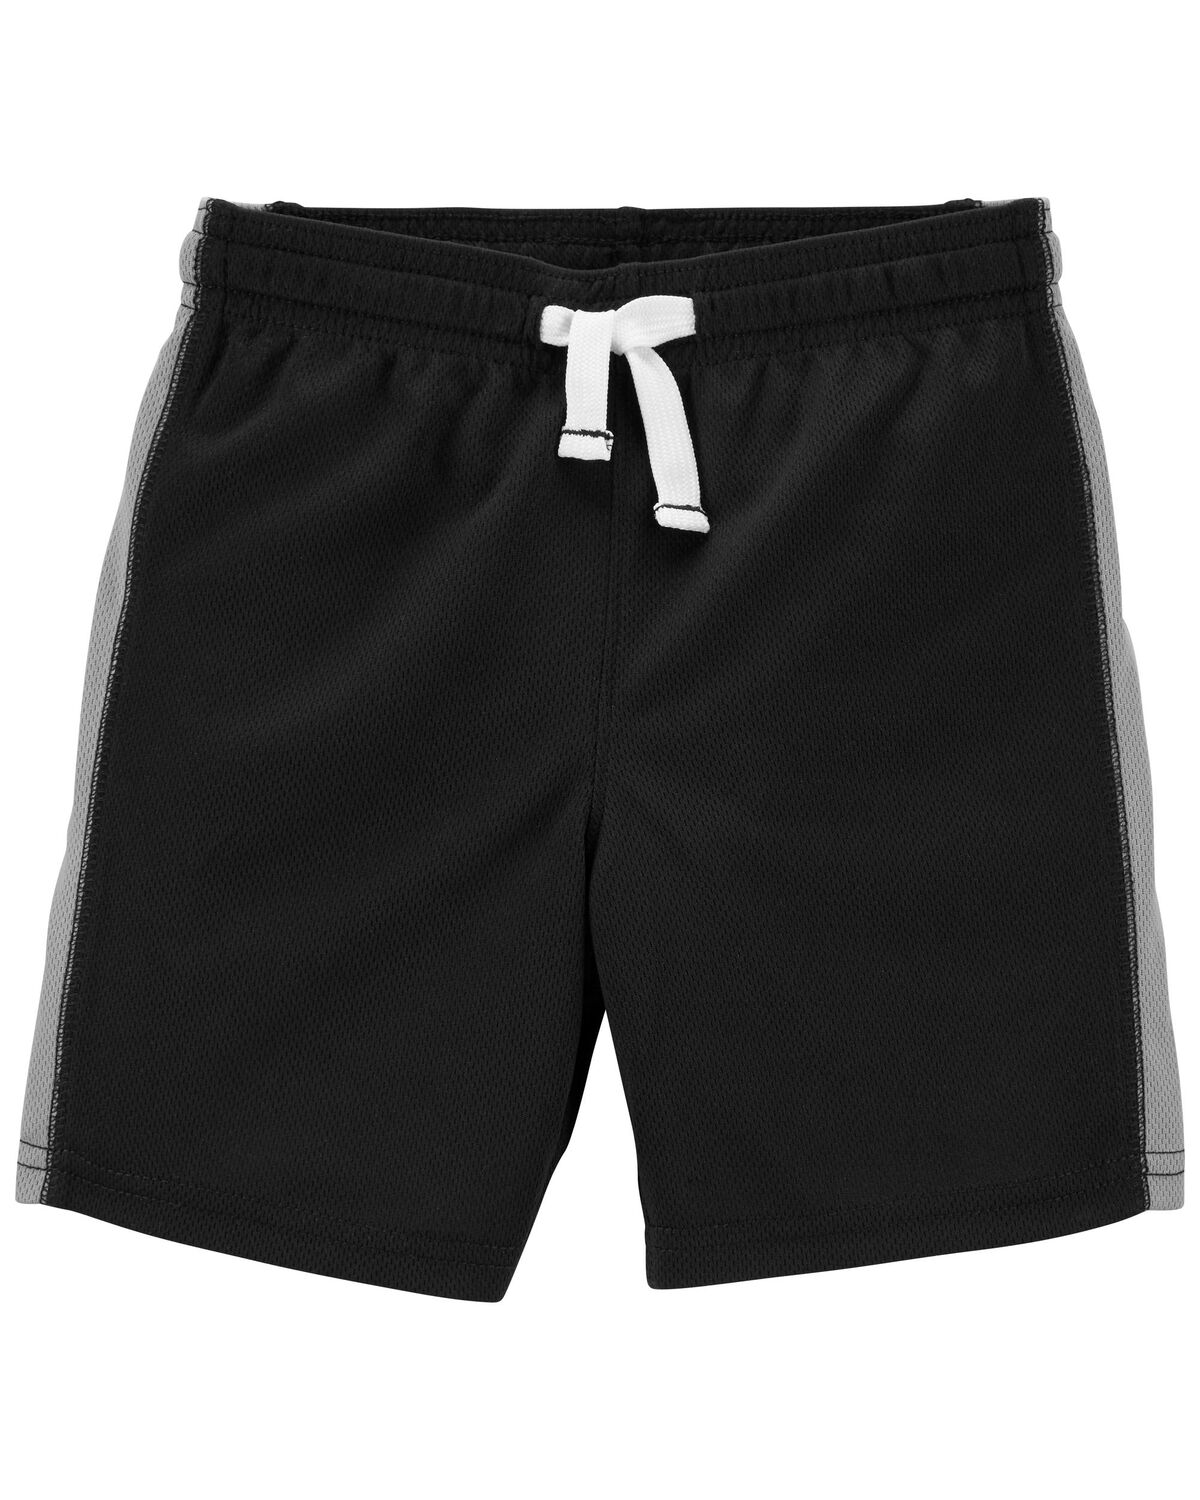 Black Toddler Athletic Mesh Shorts | carters.com